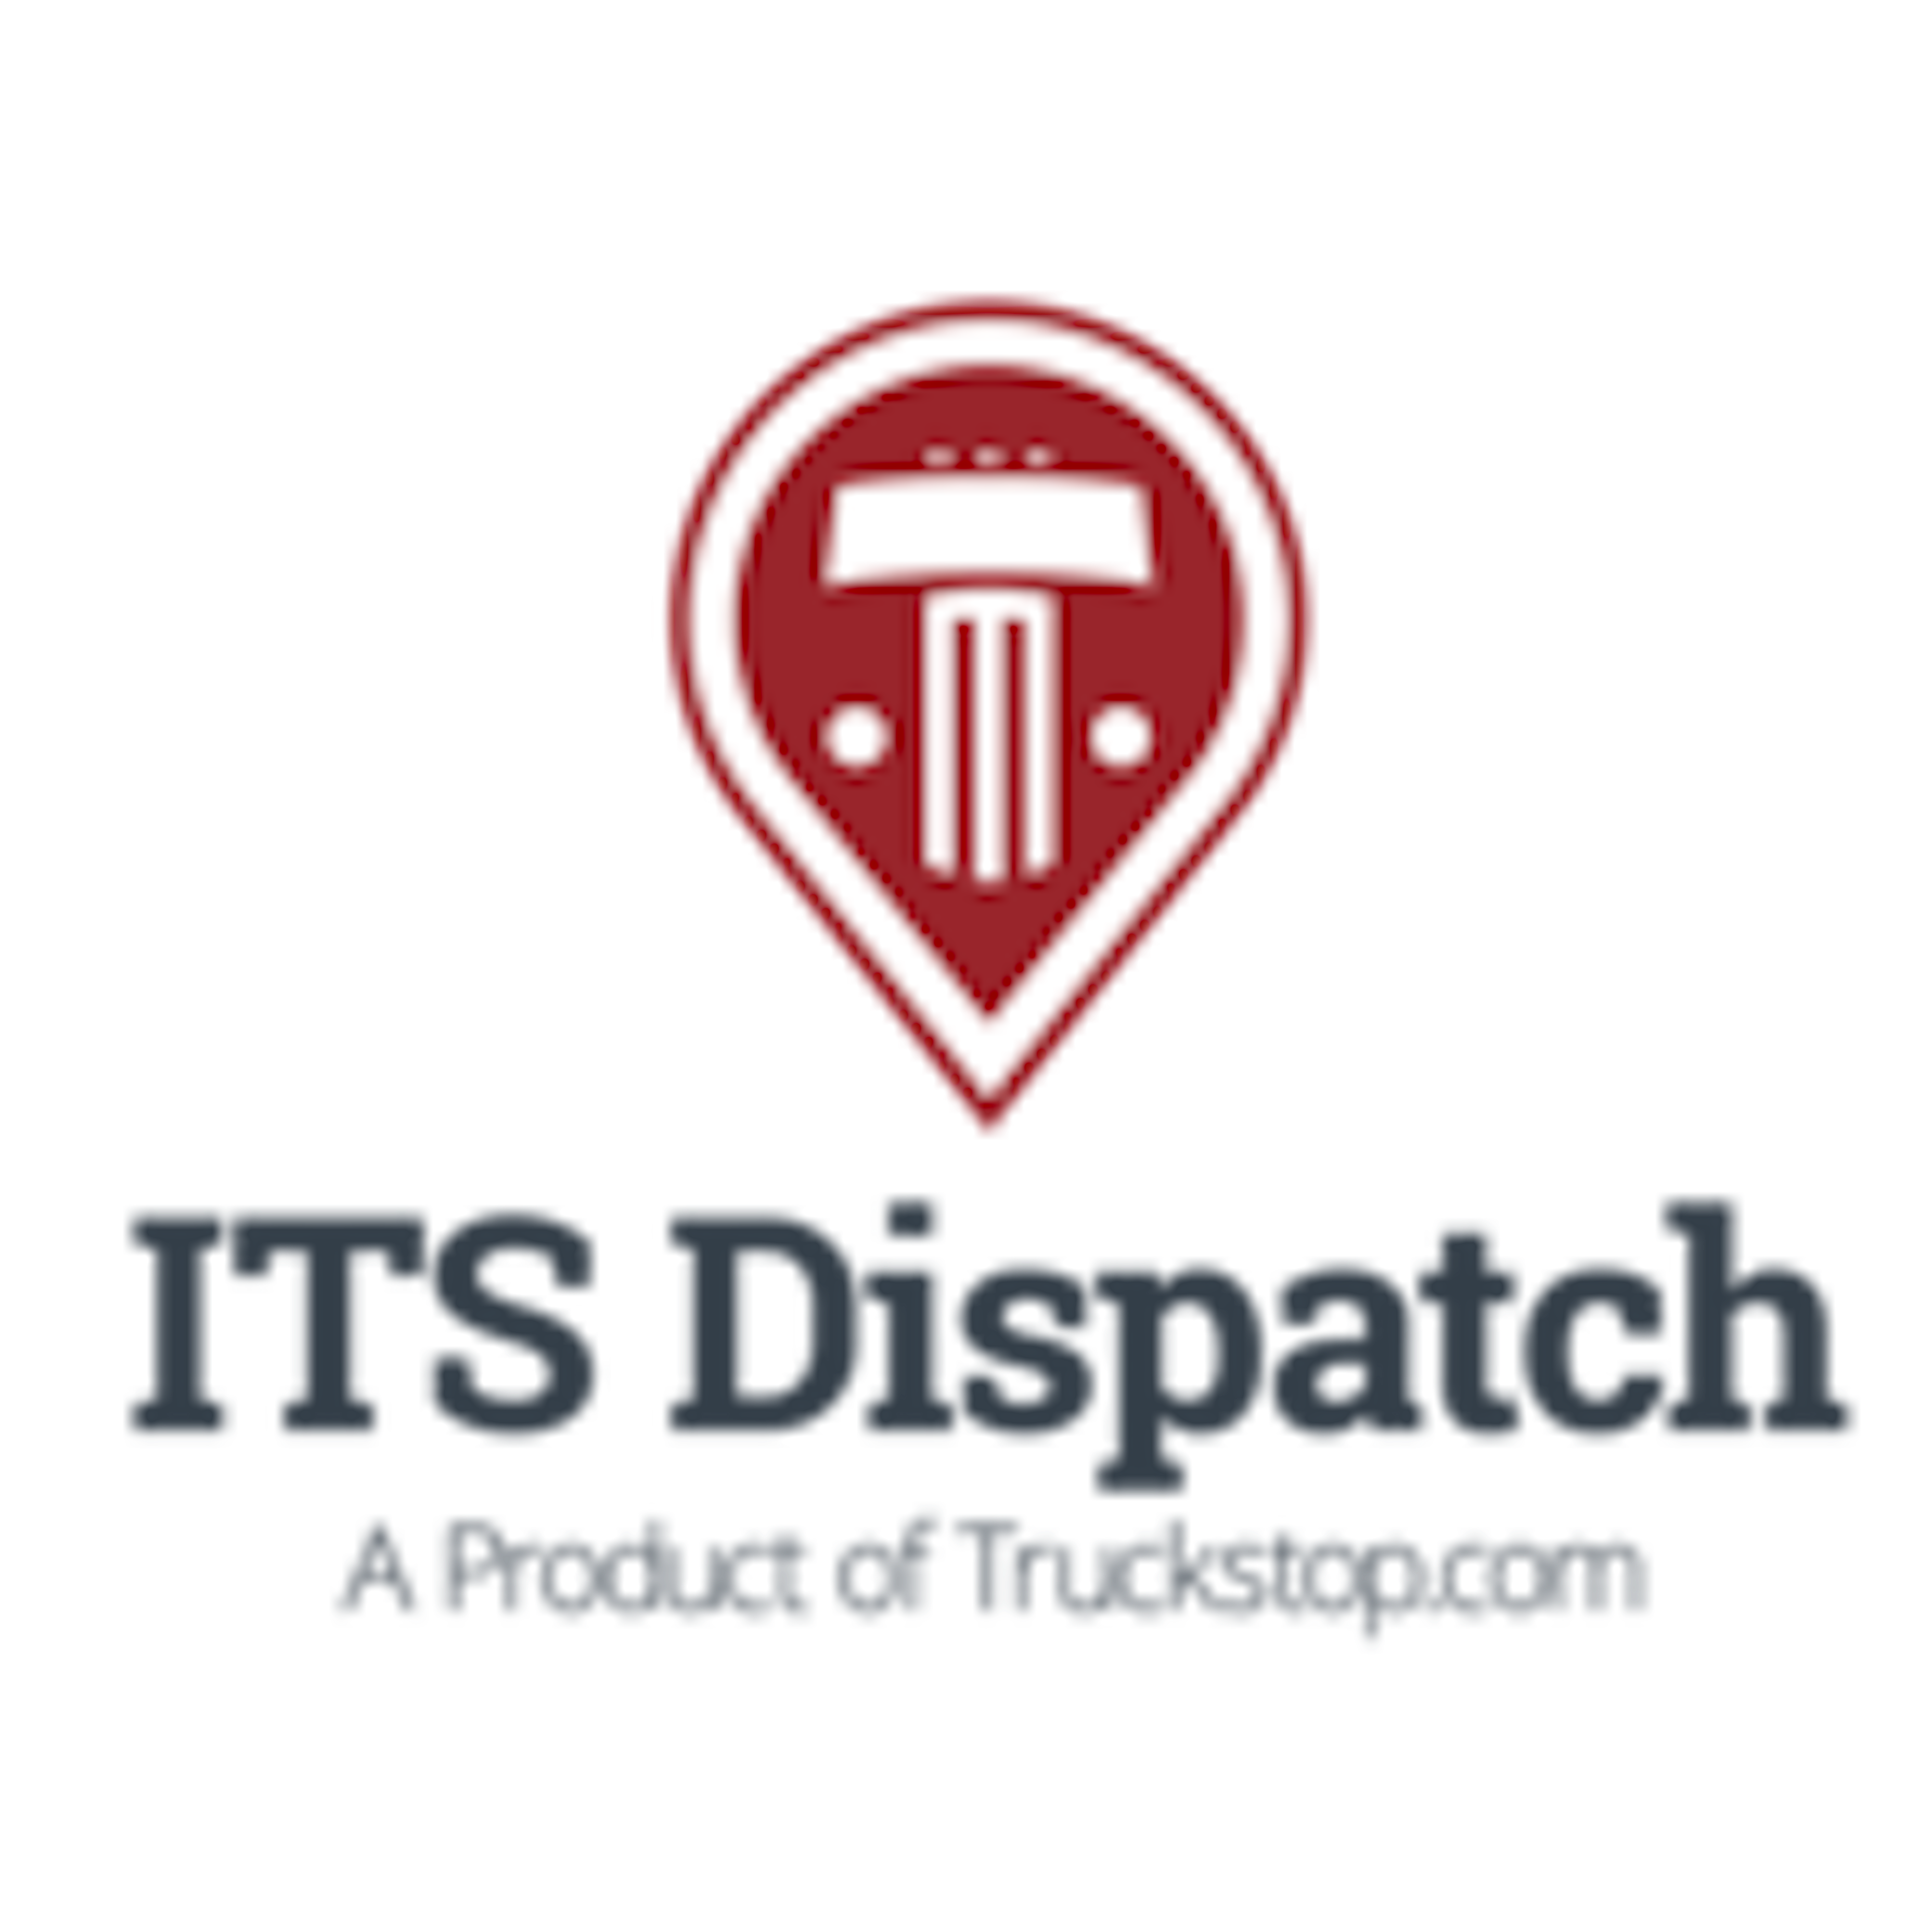 ITS Dispatch Logo